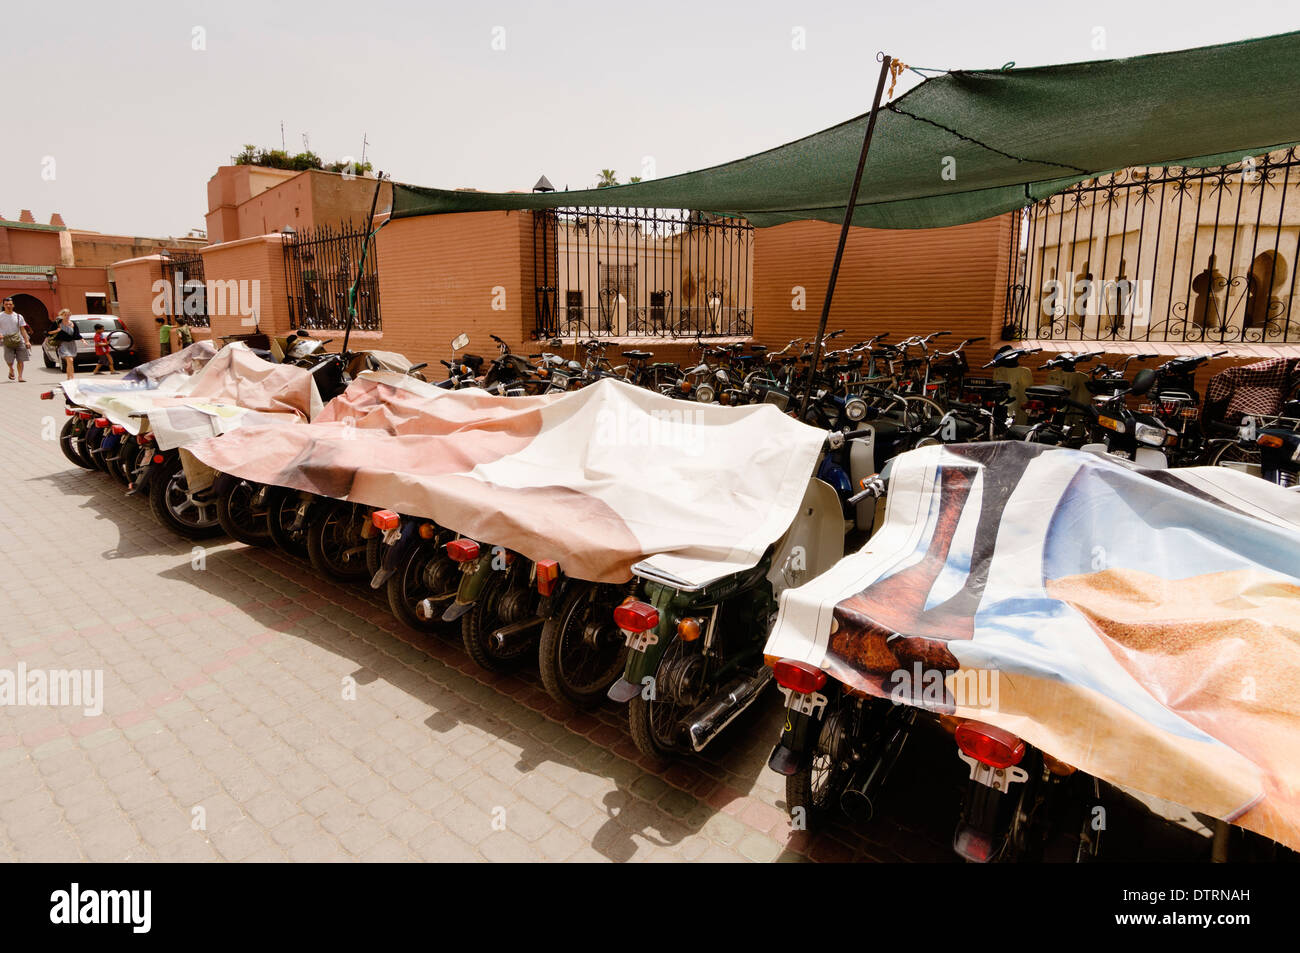 Moto parcheggiata in Place de La Kissariat Ben Youssef a Marrakech, Marocco. Foto Stock